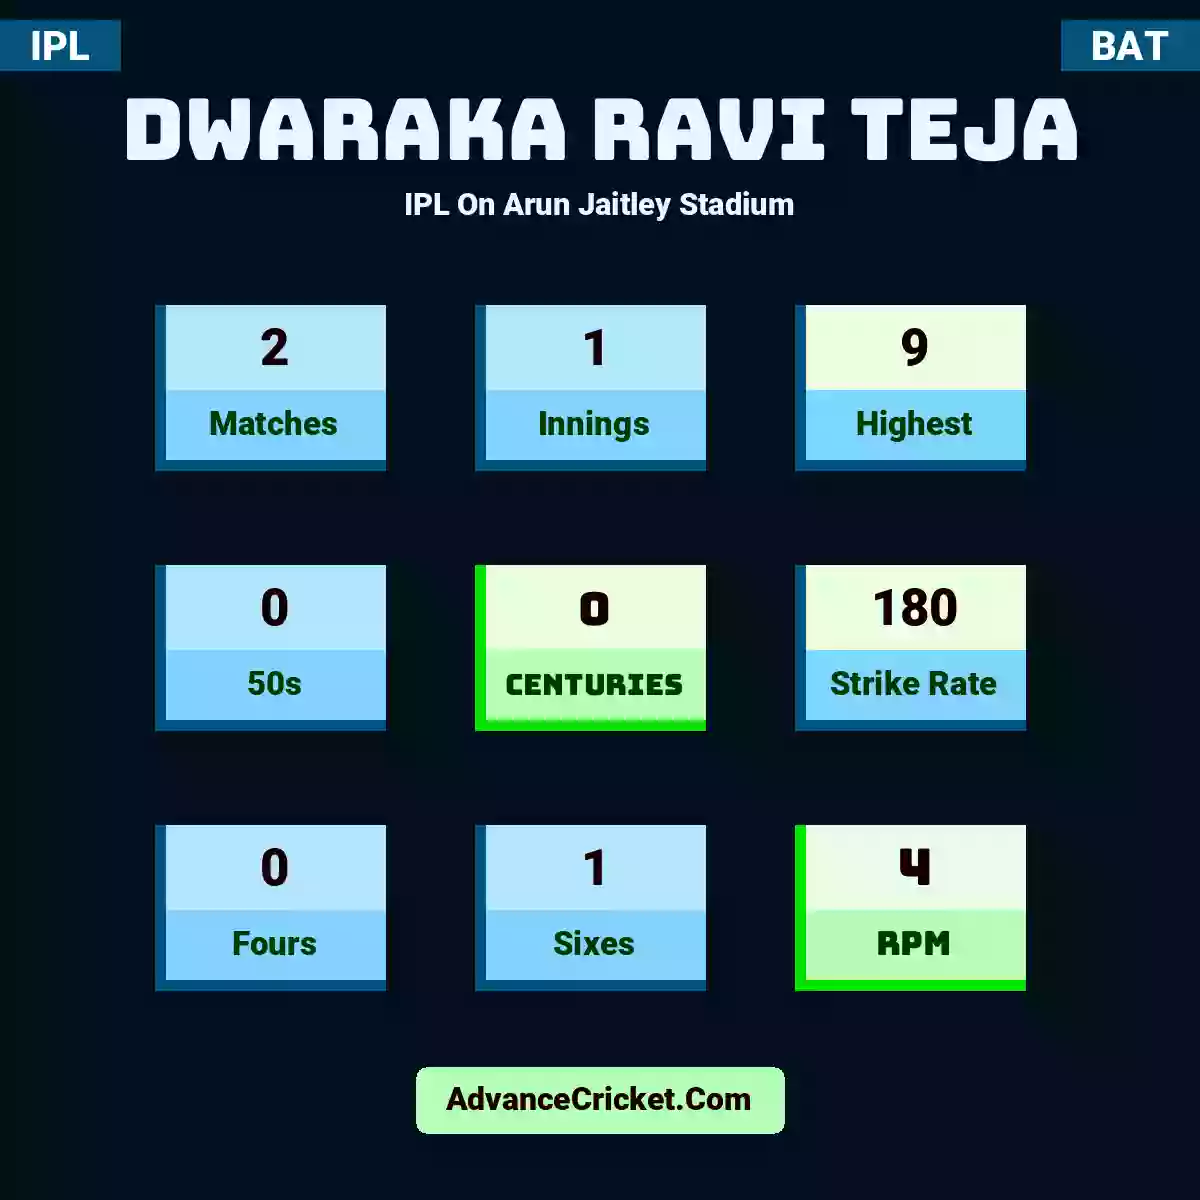 Dwaraka Ravi Teja IPL  On Arun Jaitley Stadium, Dwaraka Ravi Teja played 2 matches, scored 9 runs as highest, 0 half-centuries, and 0 centuries, with a strike rate of 180. D.Teja hit 0 fours and 1 sixes, with an RPM of 4.